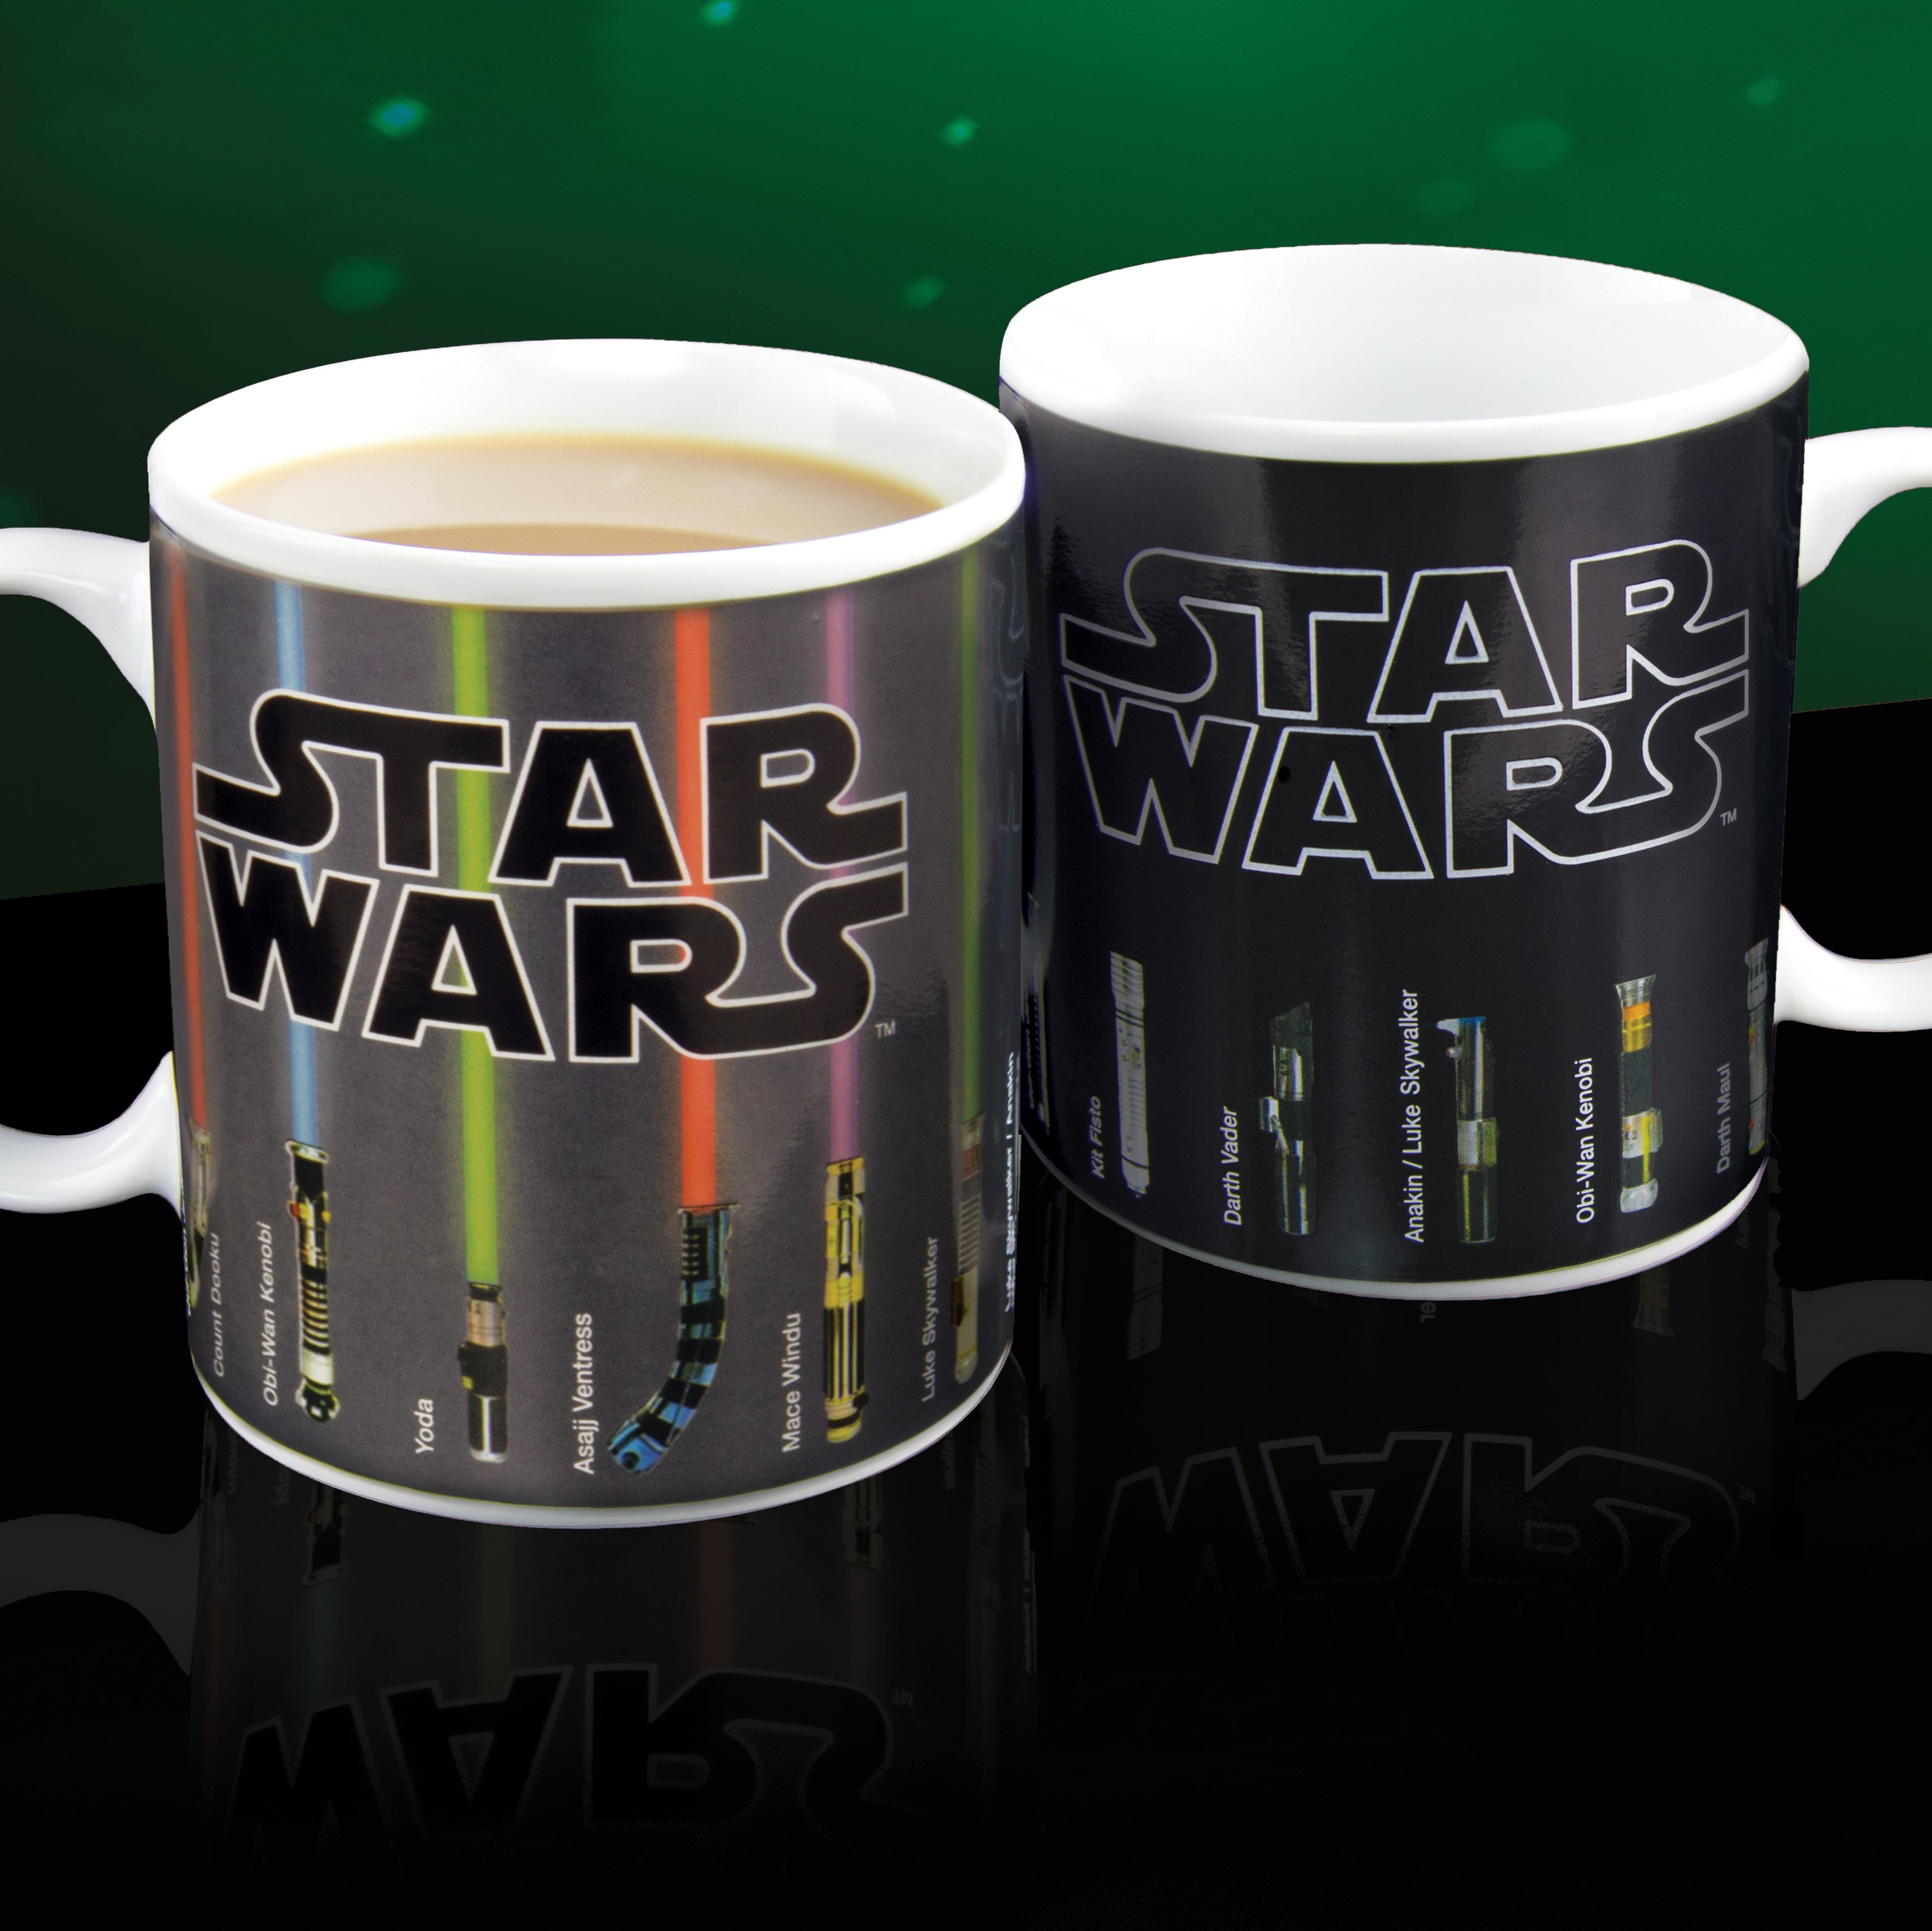 Star Wars Lightsaber Mug